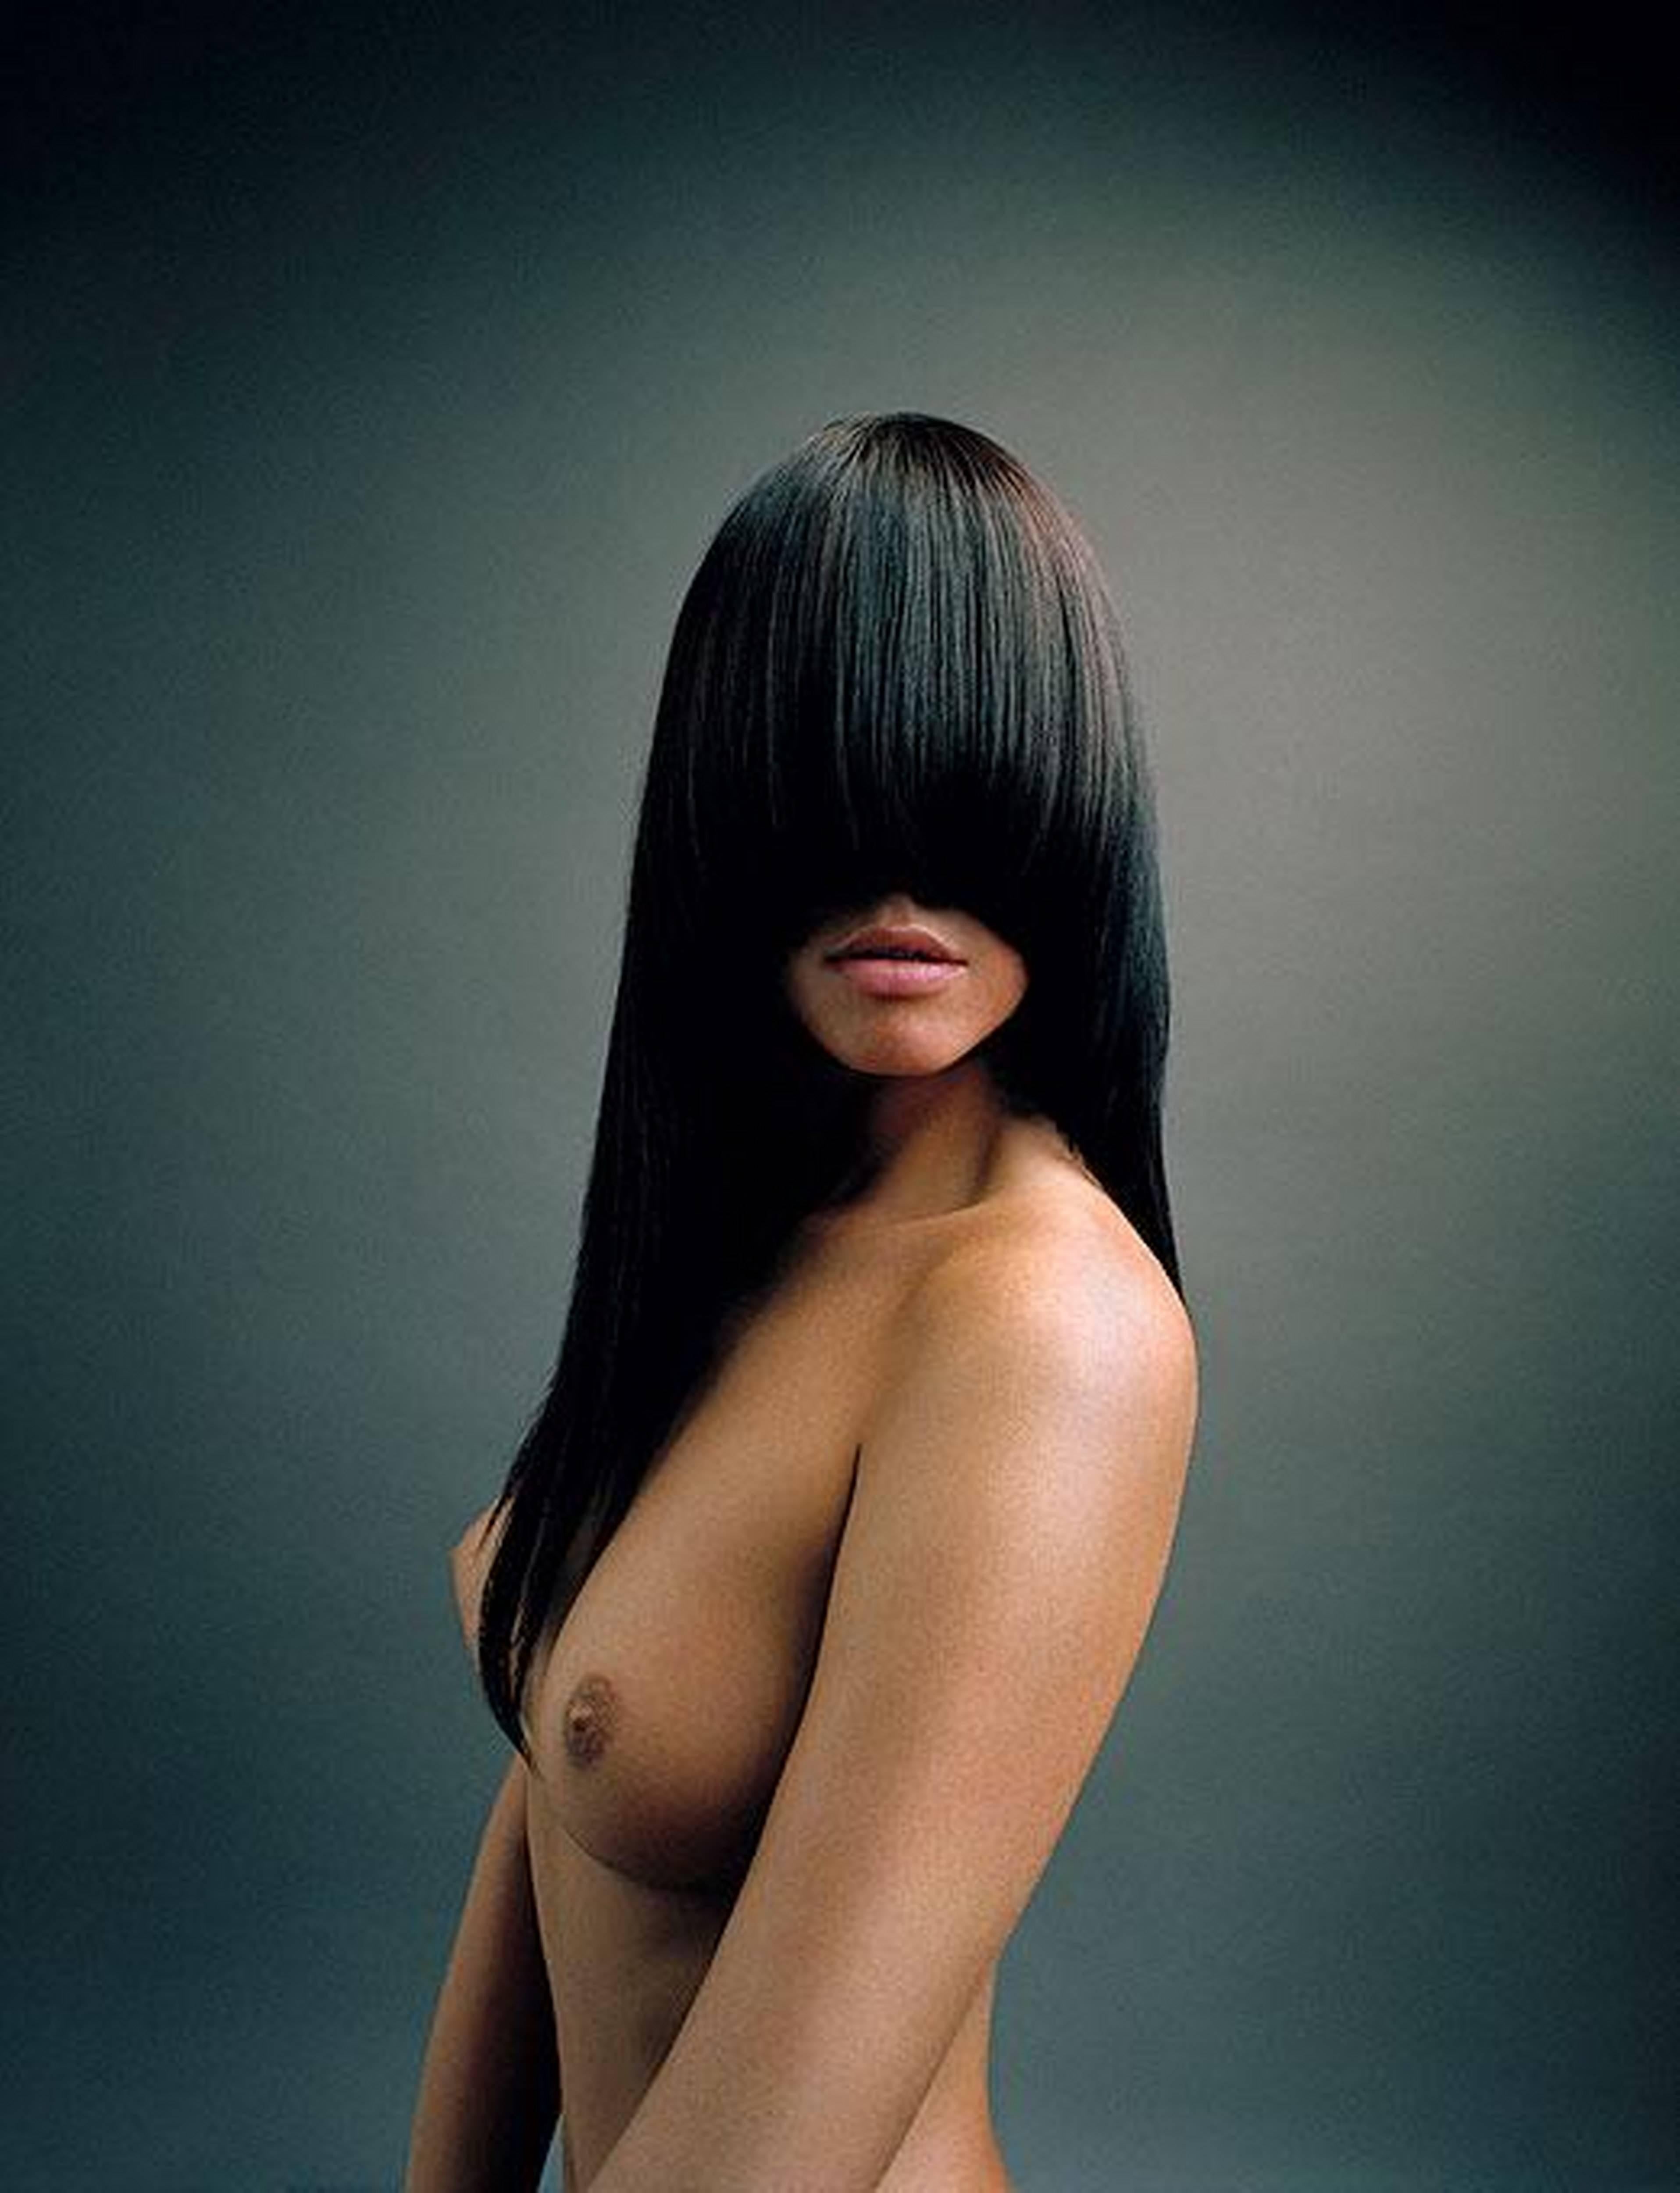 Irina - nude portrait with long hair, fine art photography, 2005